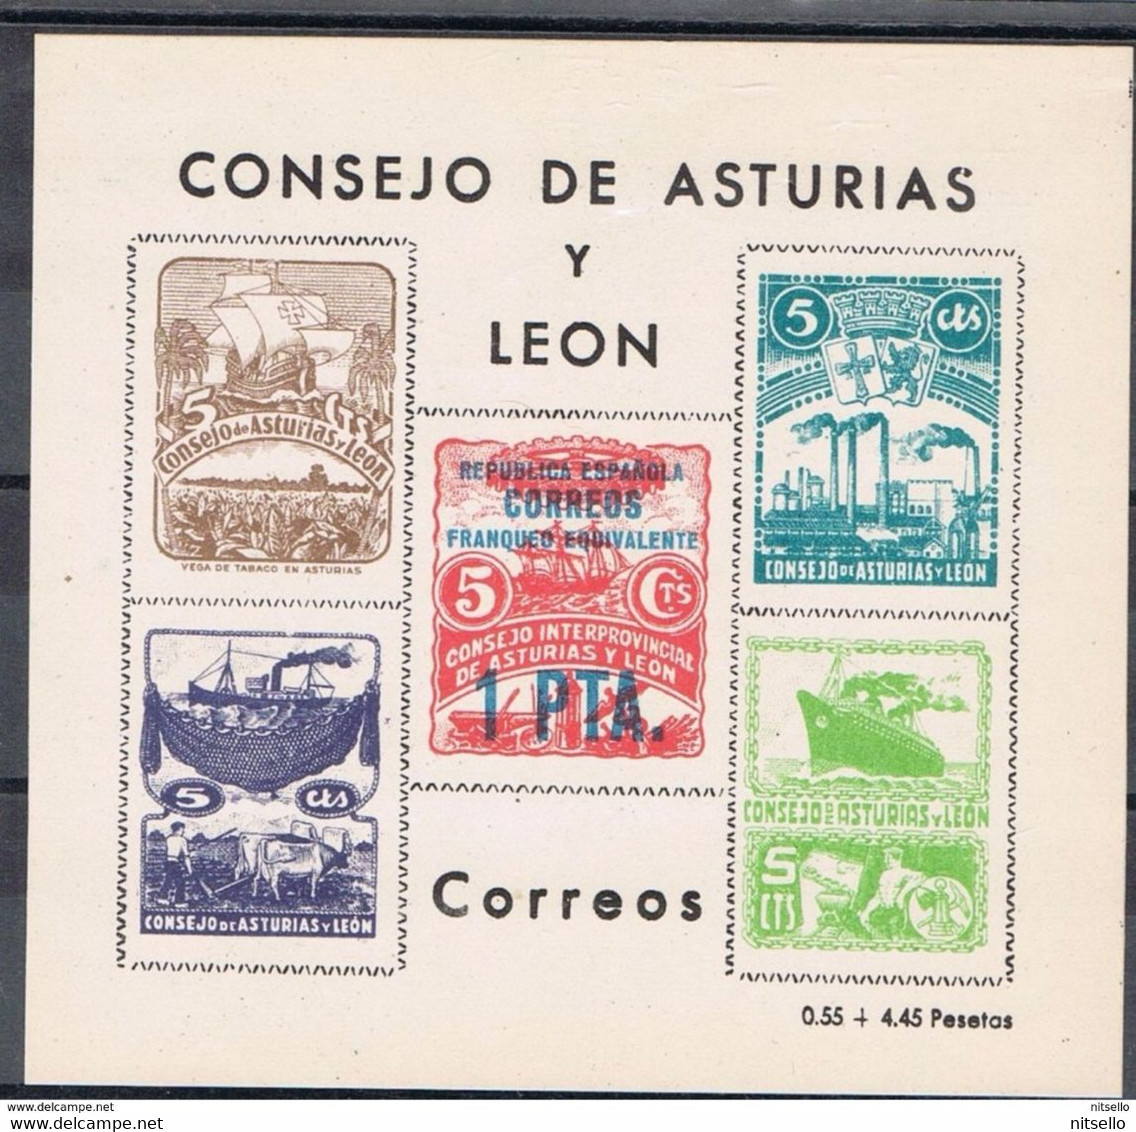 LOTE 1385  ///  CONSEJO DE ASTURIAS Y LEON          ¡¡¡¡¡¡ LIQUIDATION !!!!!!! - Asturias & Leon